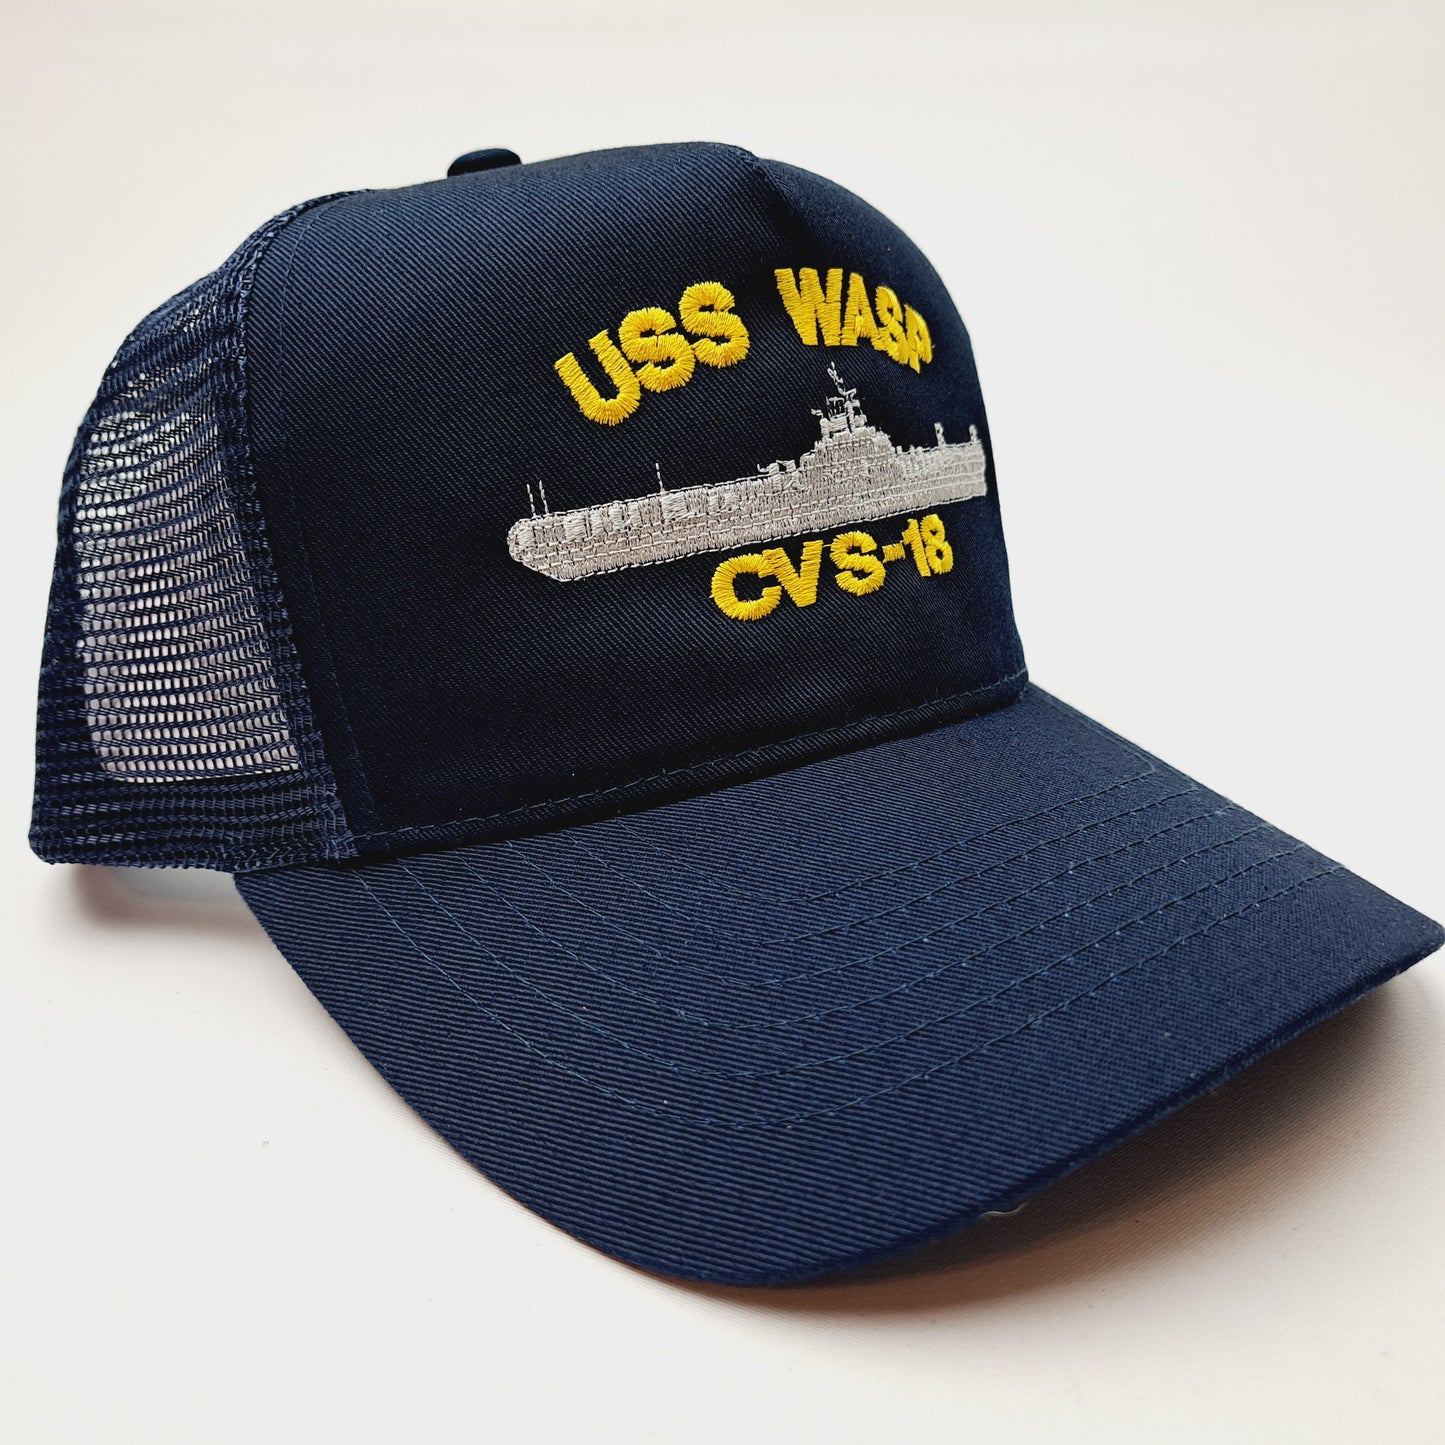 U.S. Navy USS Wasp CVS-18 Men's Mesh Snapback Cap Hat Navy Blue